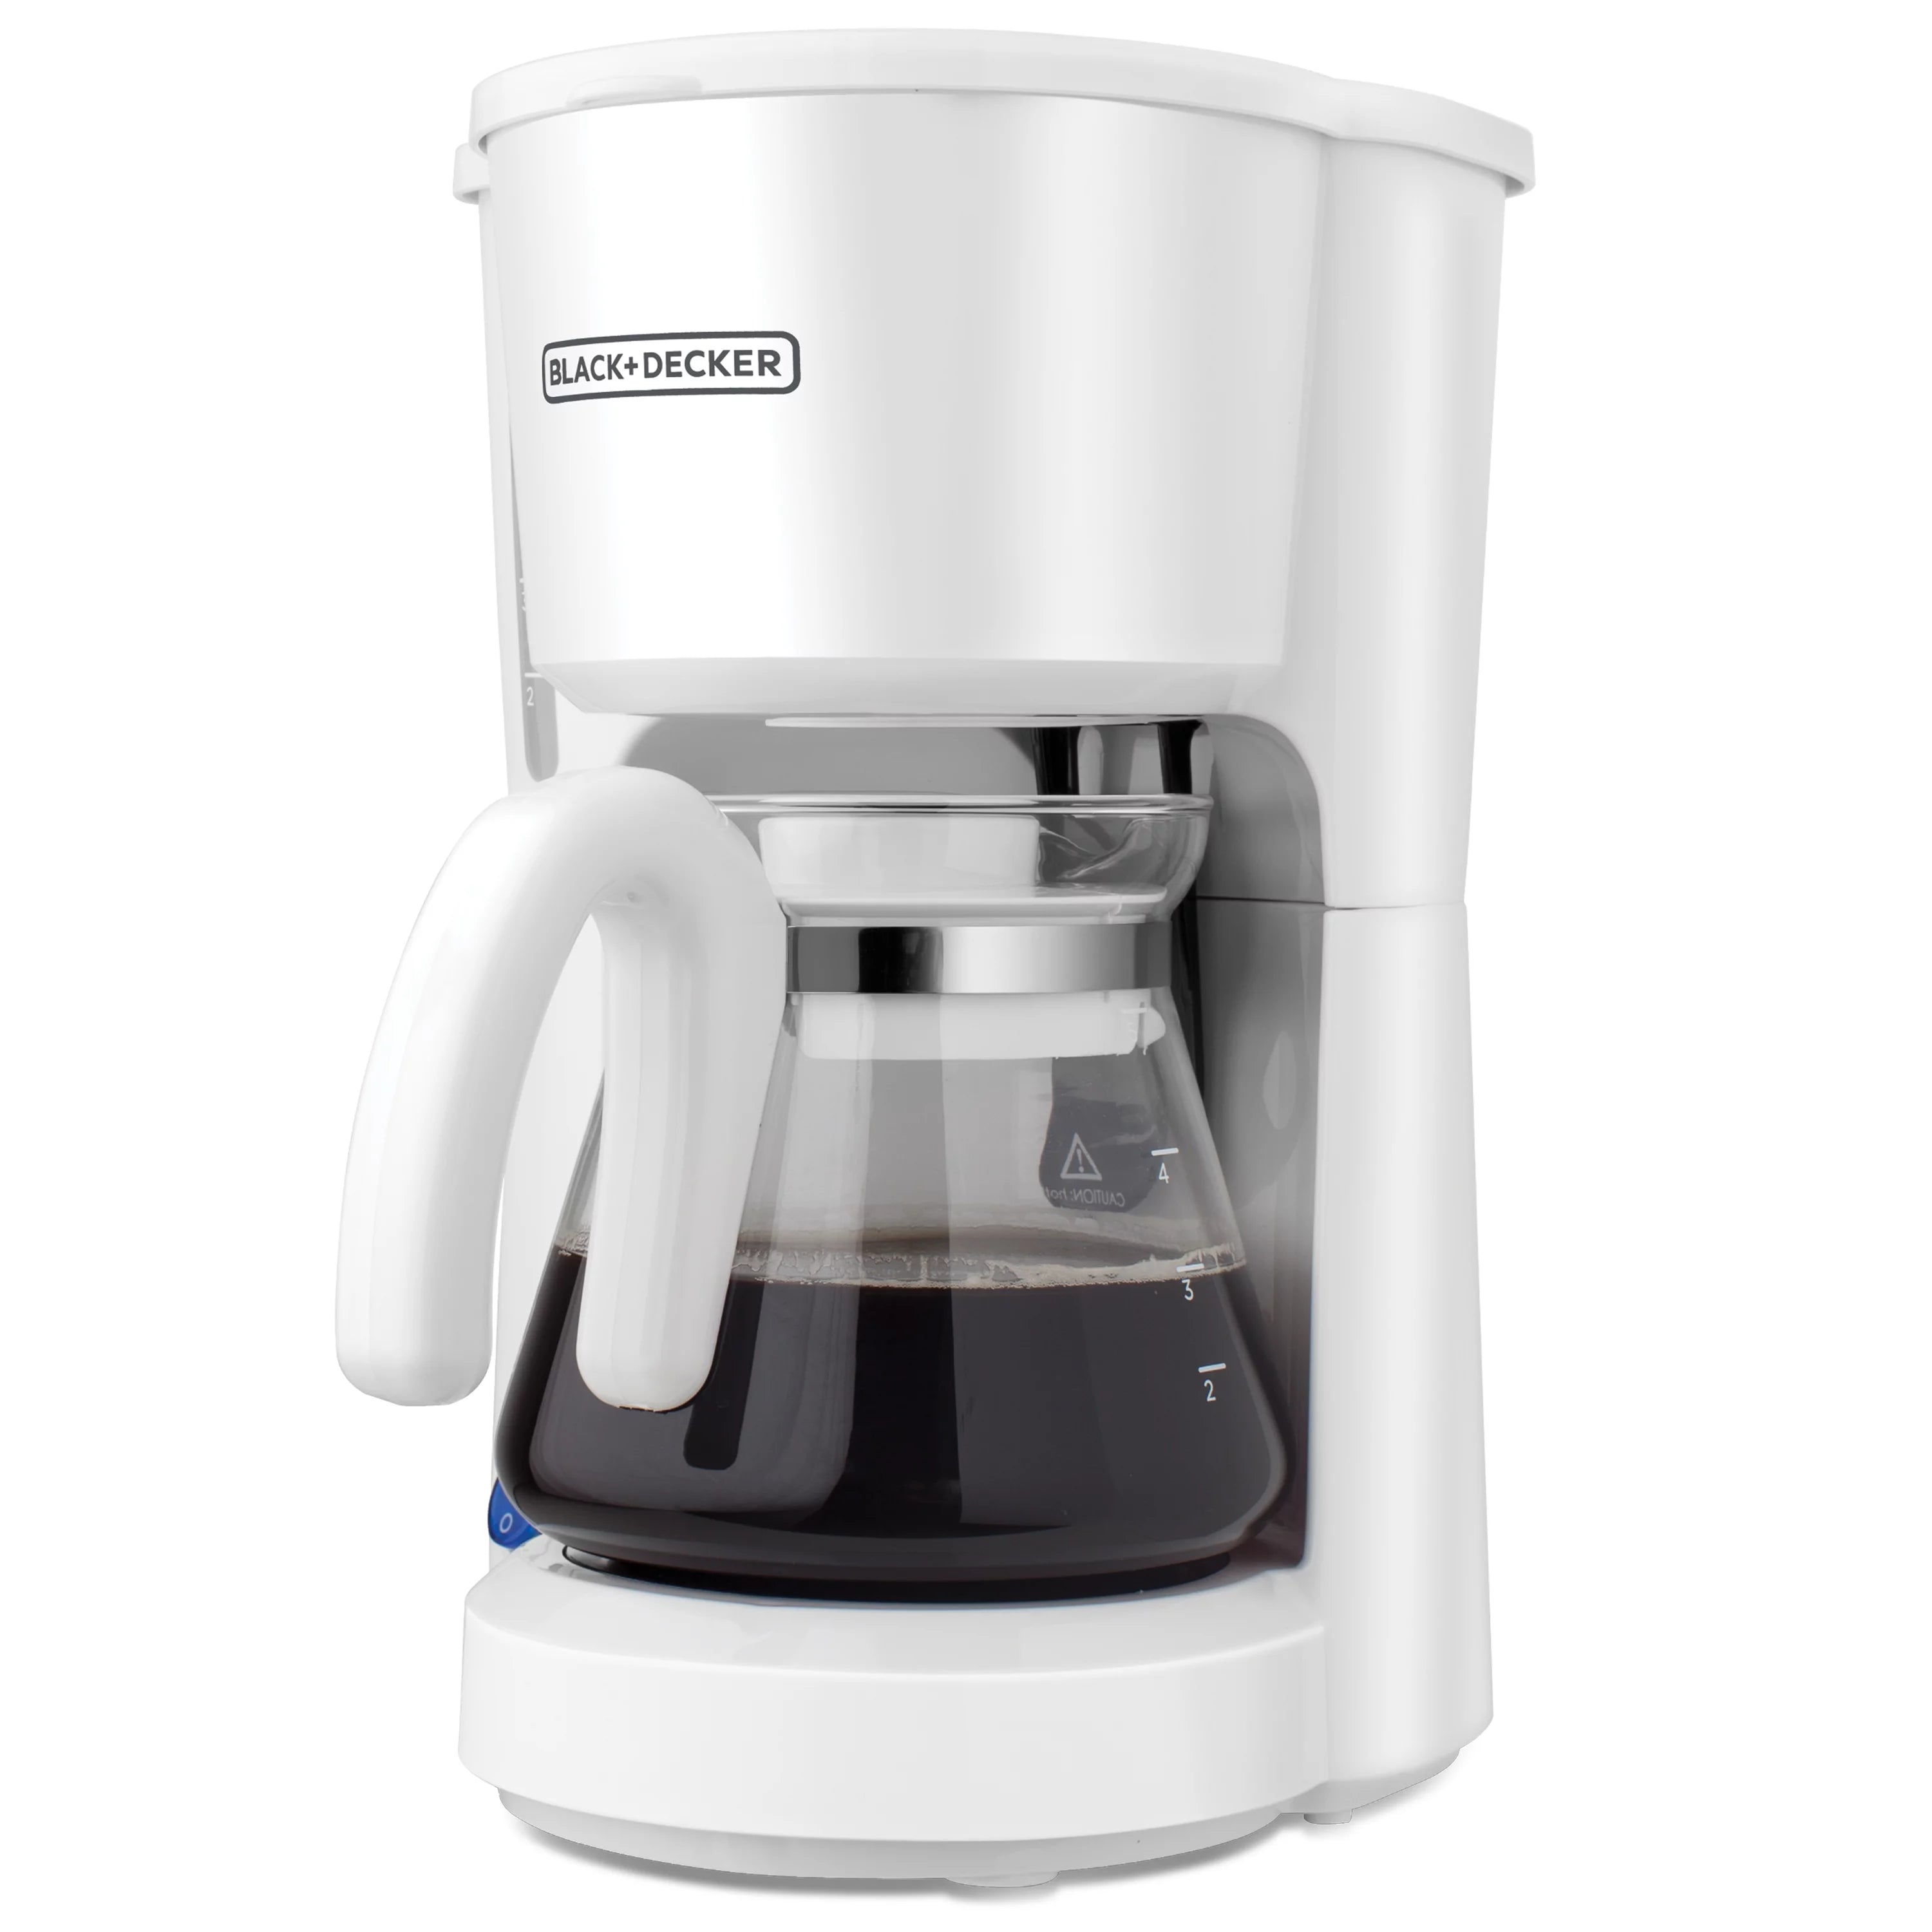 Oster Cappuccino and Espresso Maker Steam Pressure System, 4 Cup